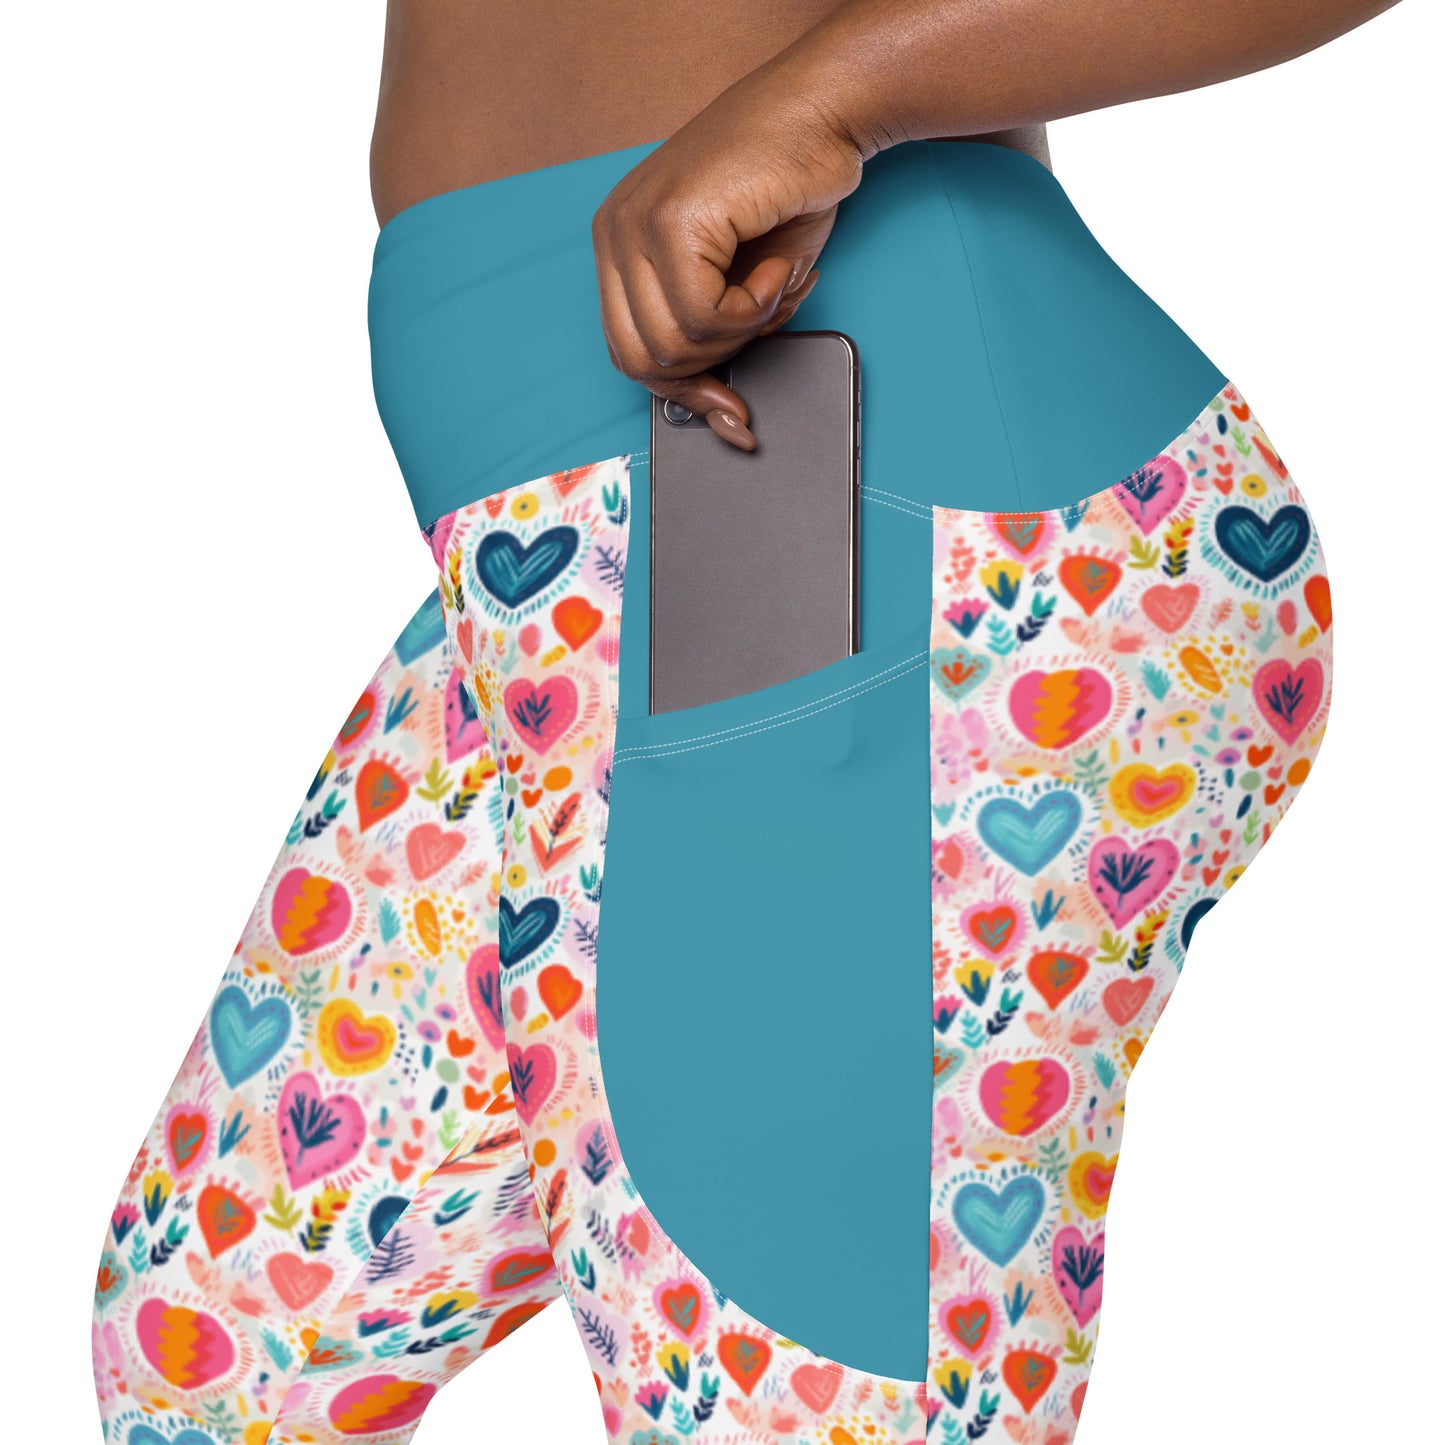 Schnucki Crossover Waist 7/8 Recycled Yoga Leggings / Yoga Pants with Pockets